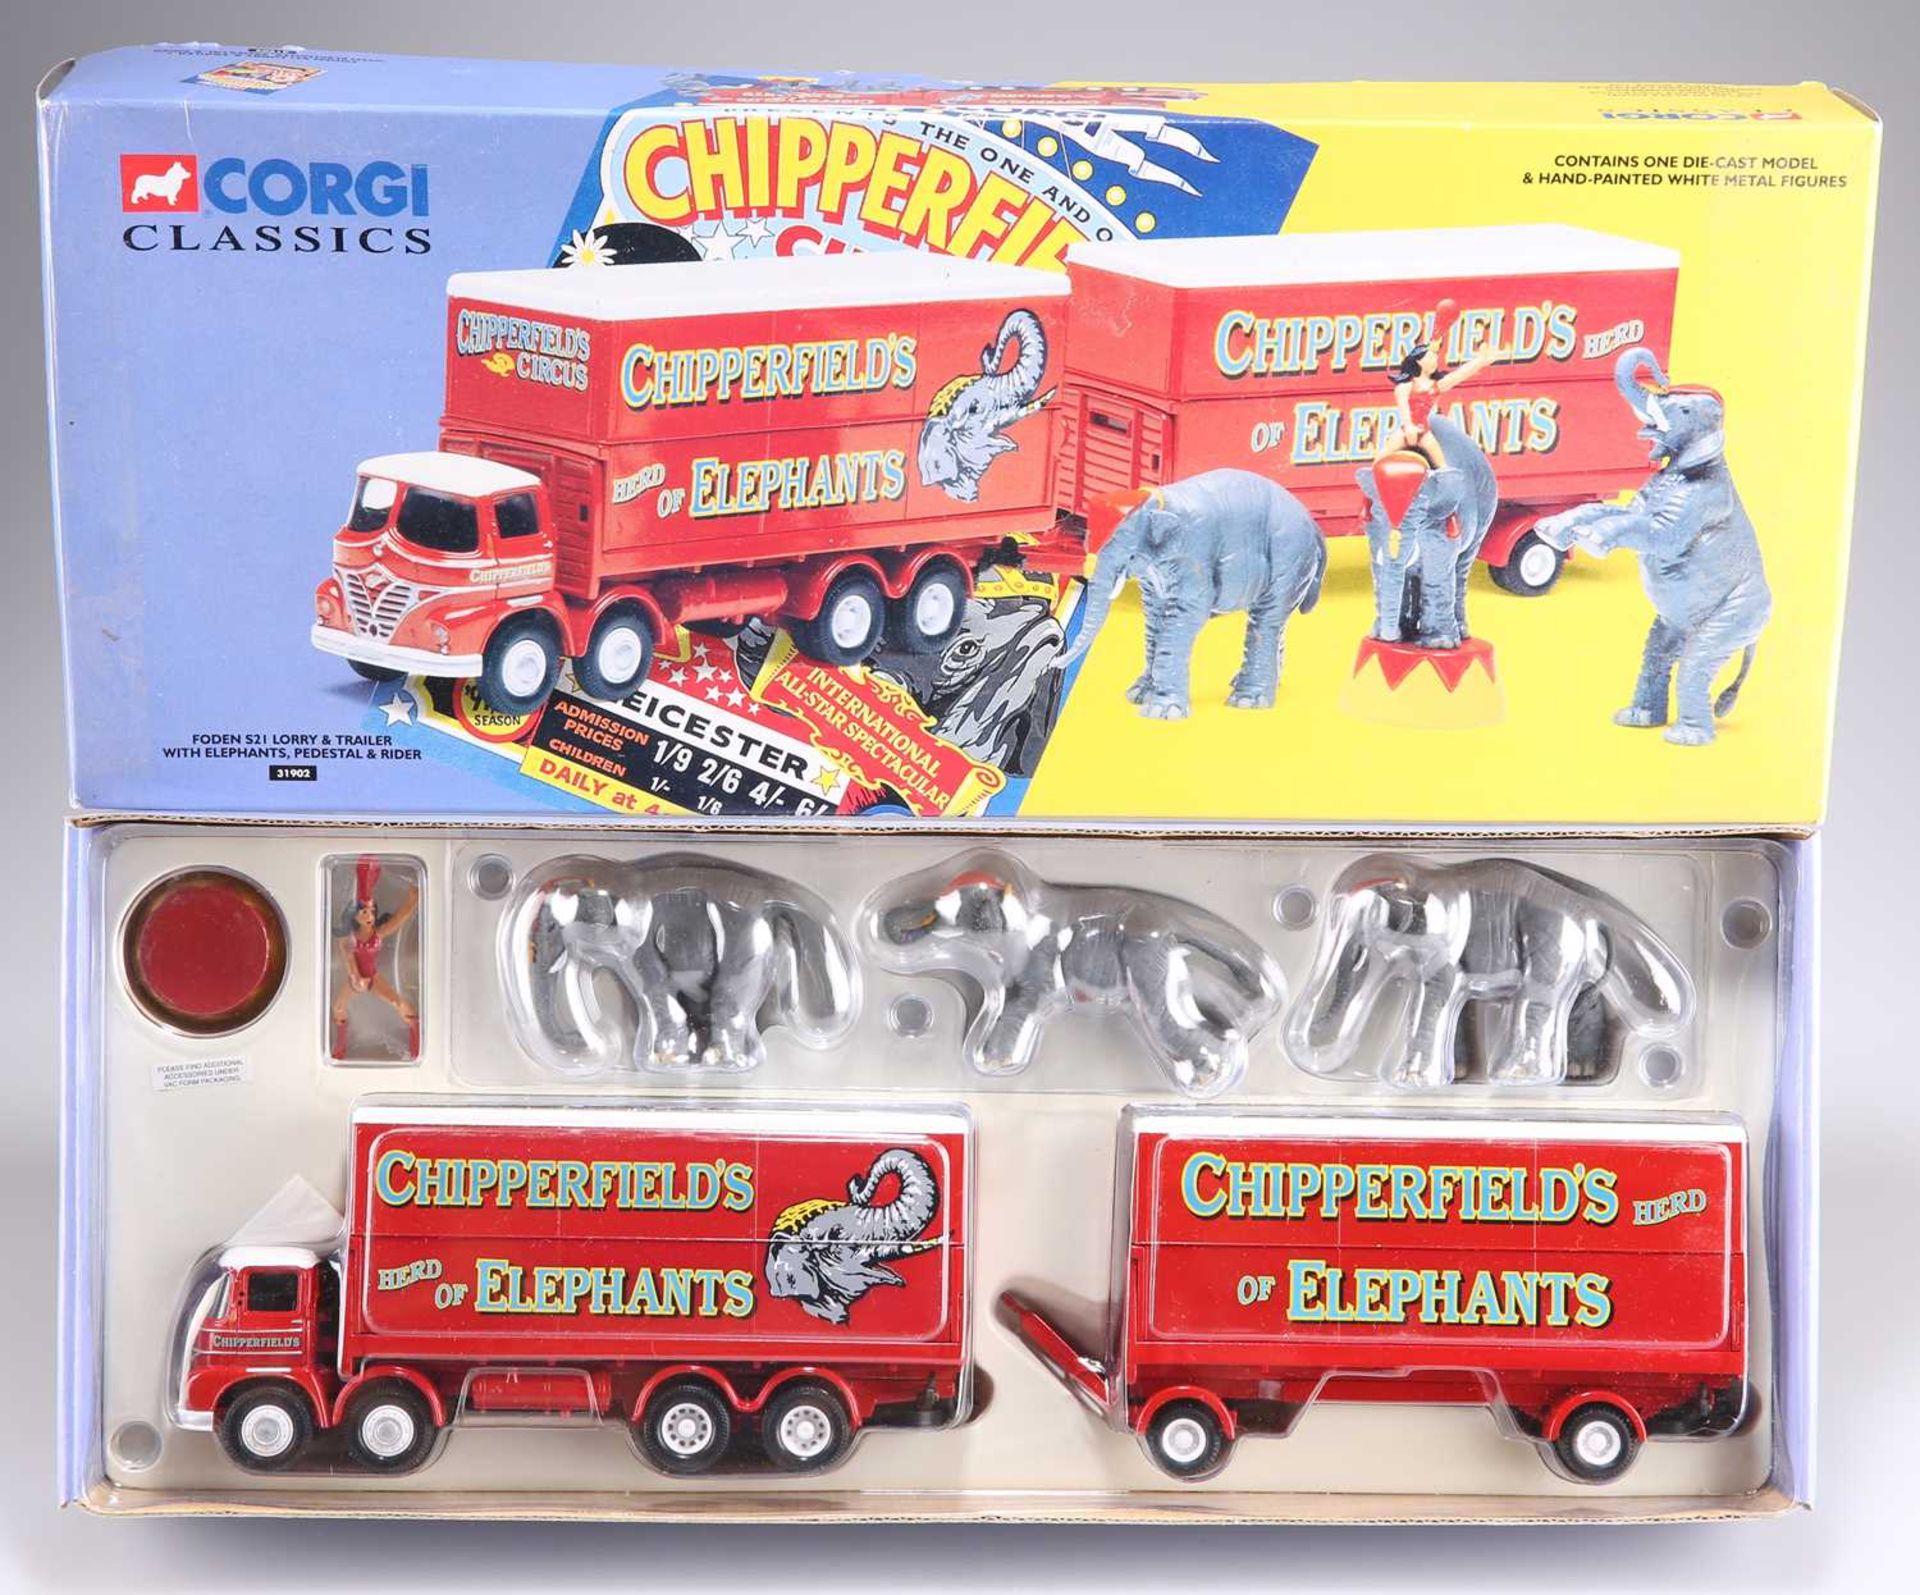 A CORGI CLASSICS FODEN S21 LORRY & TRAILER WITH ELEPHANTS, PEDESTAL & RIDER, 31902